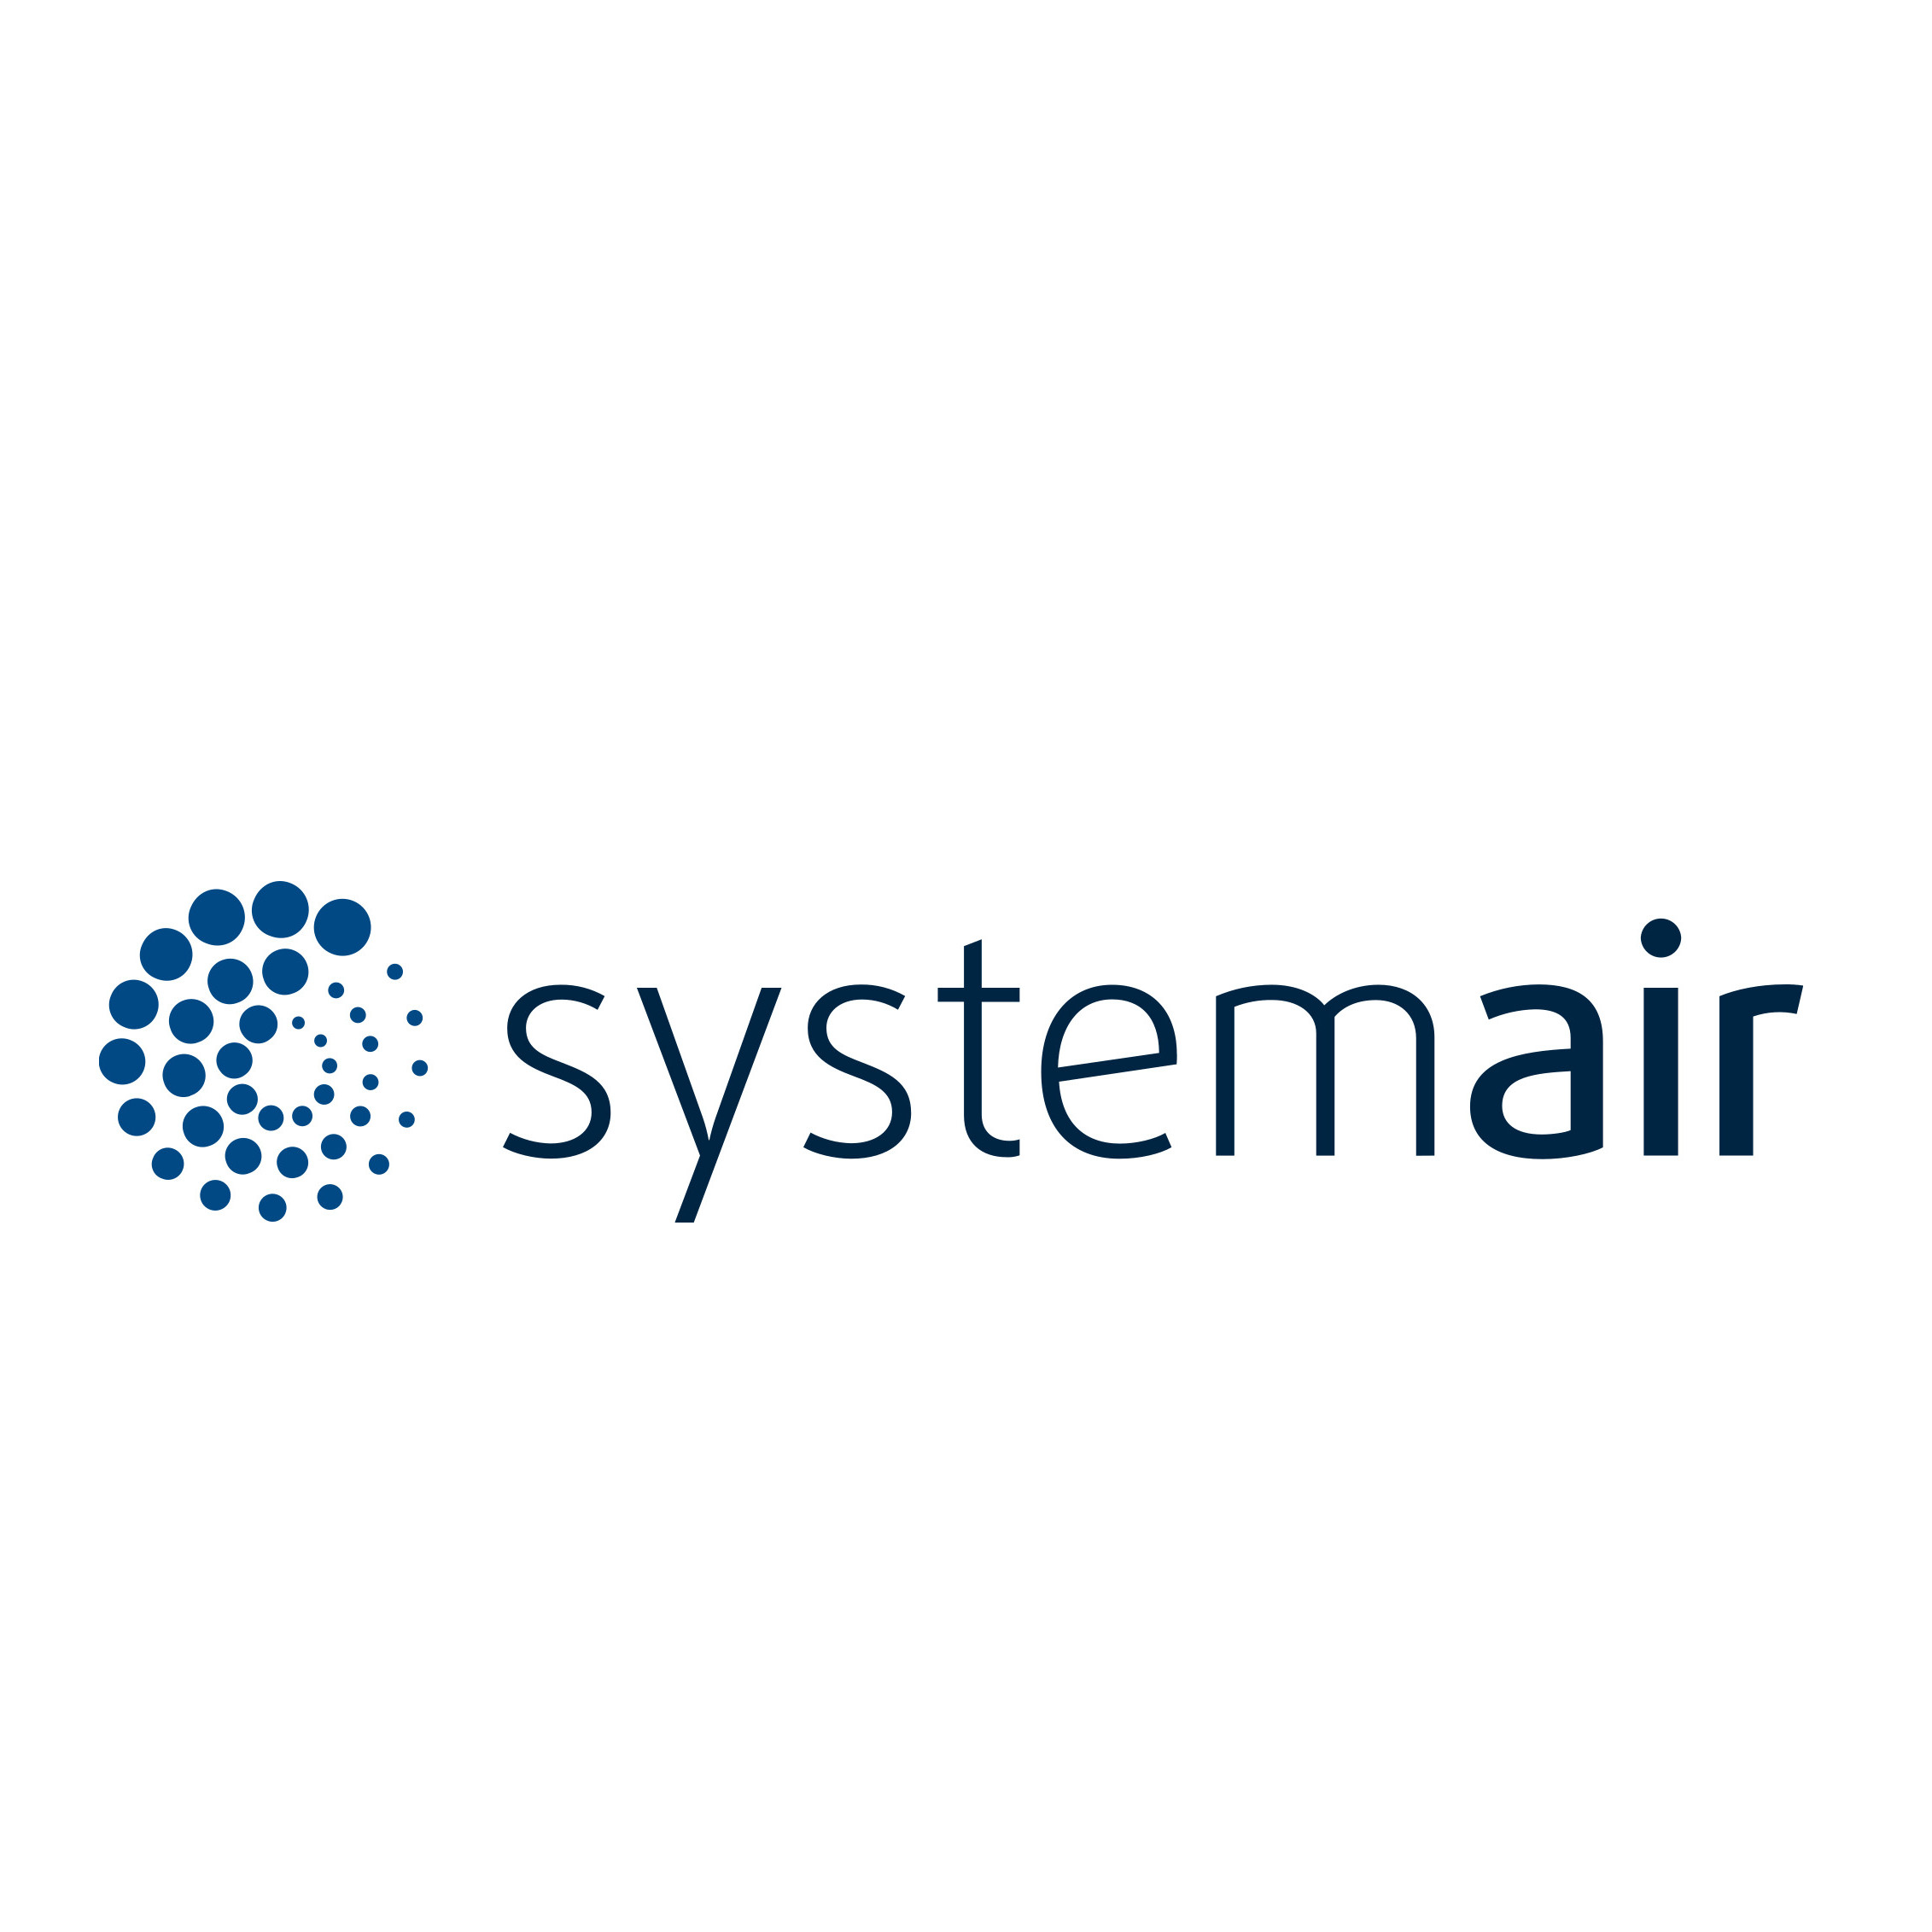 SYSTEMAIR AS logo